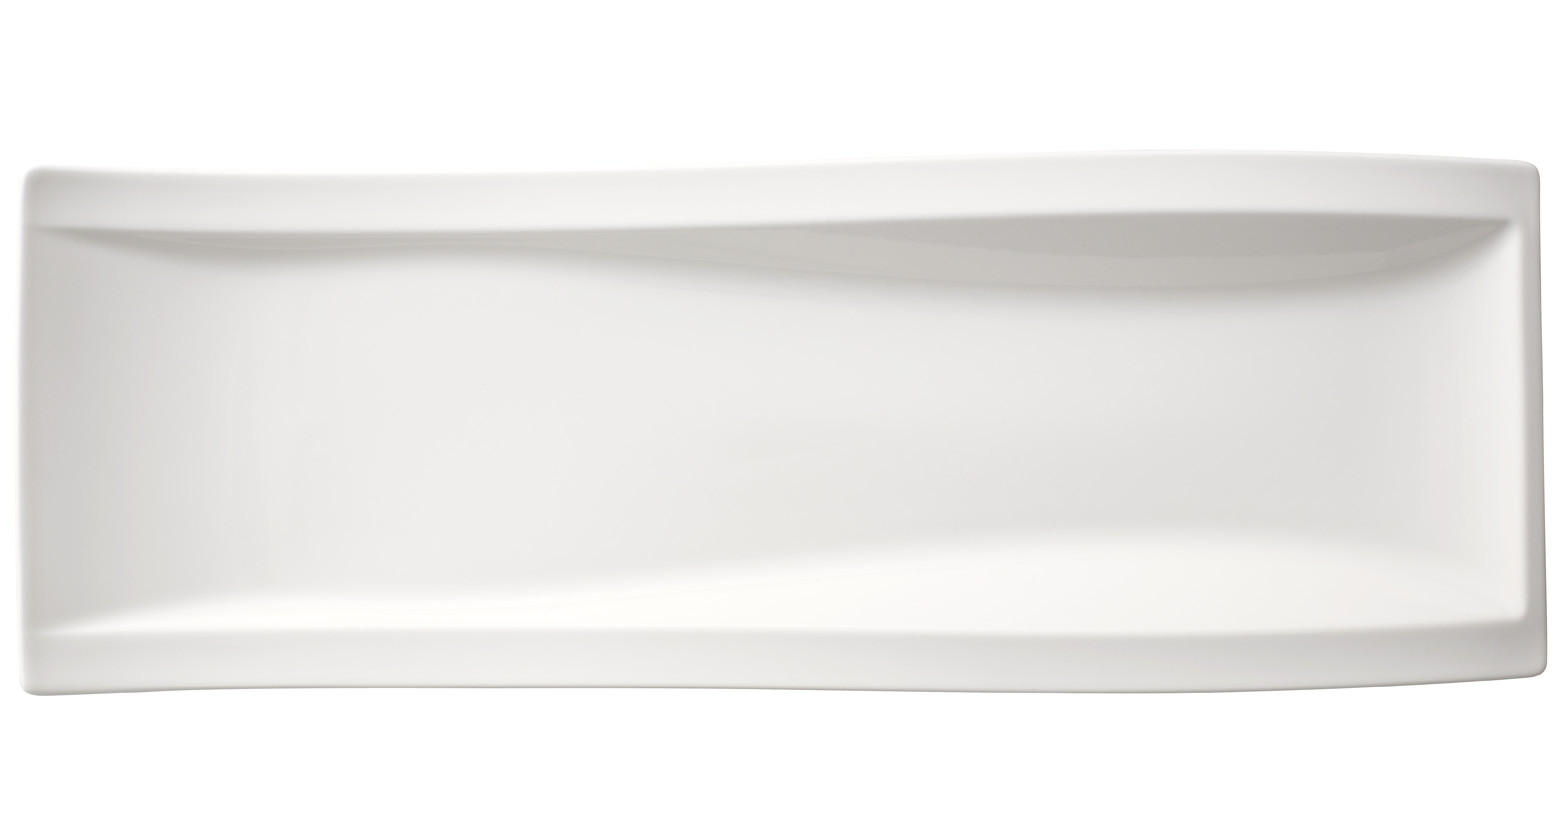 SERVIERPLATTE - Weiß, Basics, Keramik (15/42cm) - Villeroy & Boch